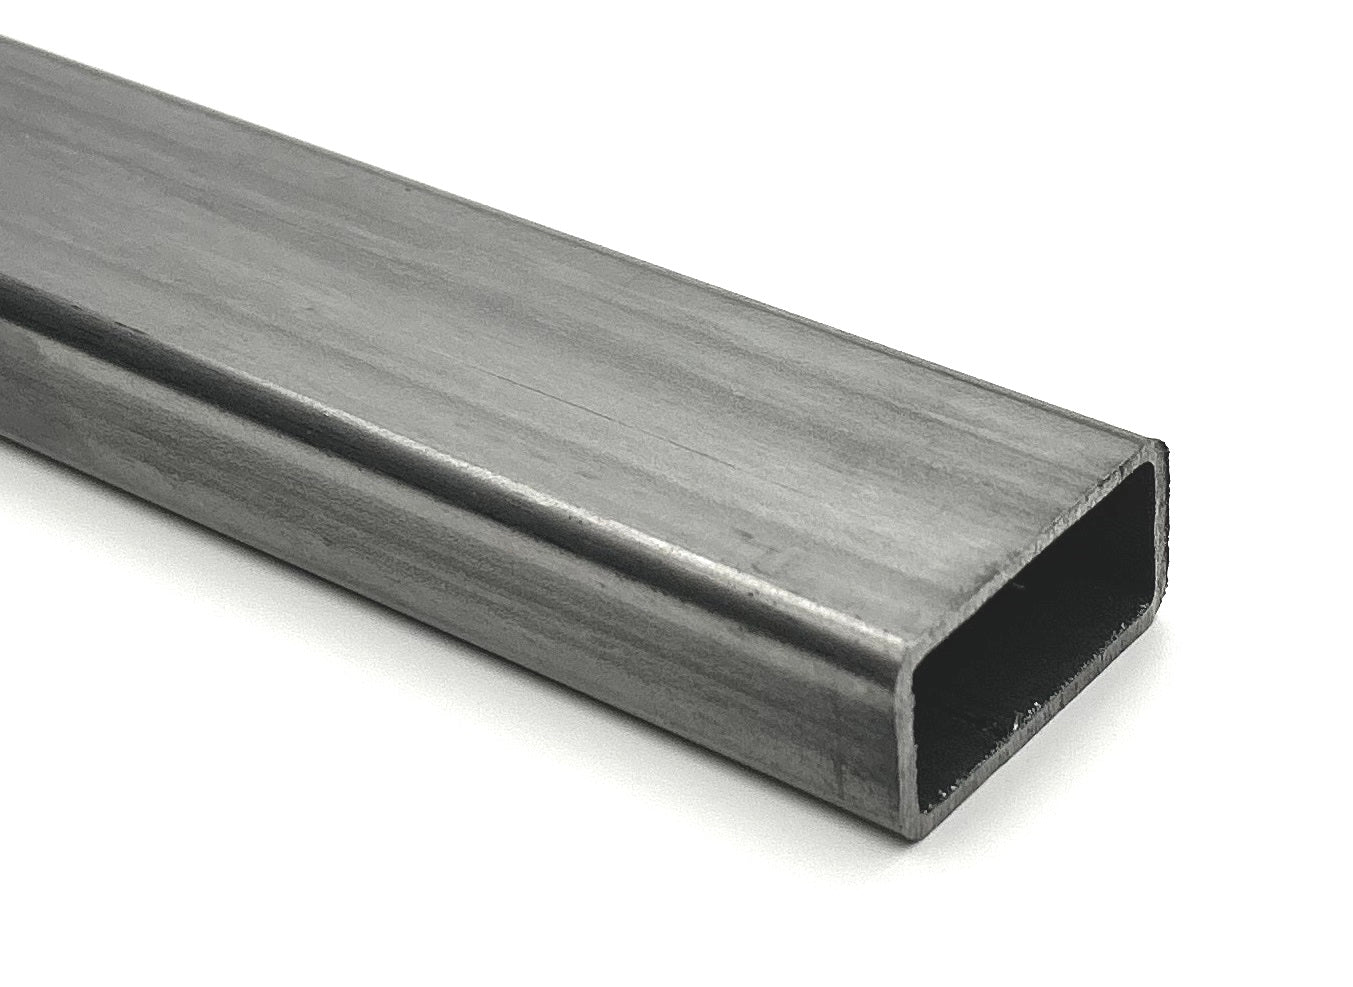 Sort stål - Rektangulært rør 40x20mm